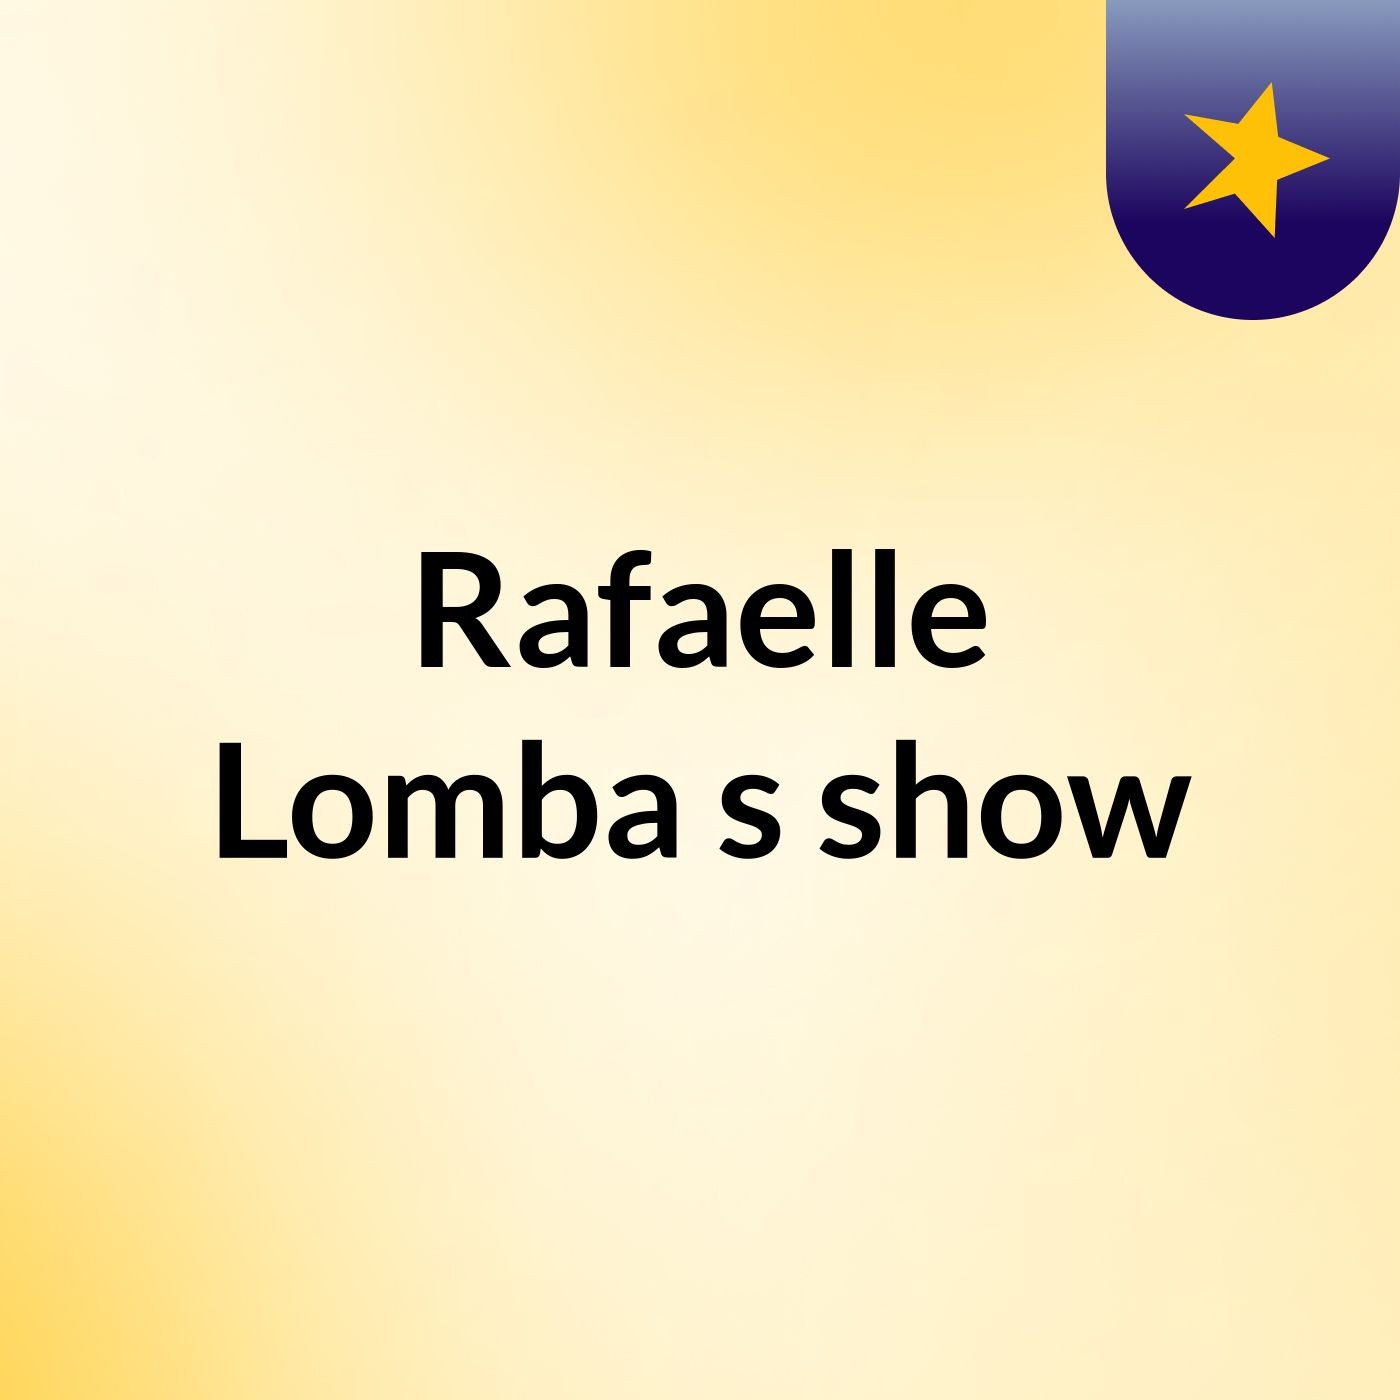 Rafaelle Lomba's show